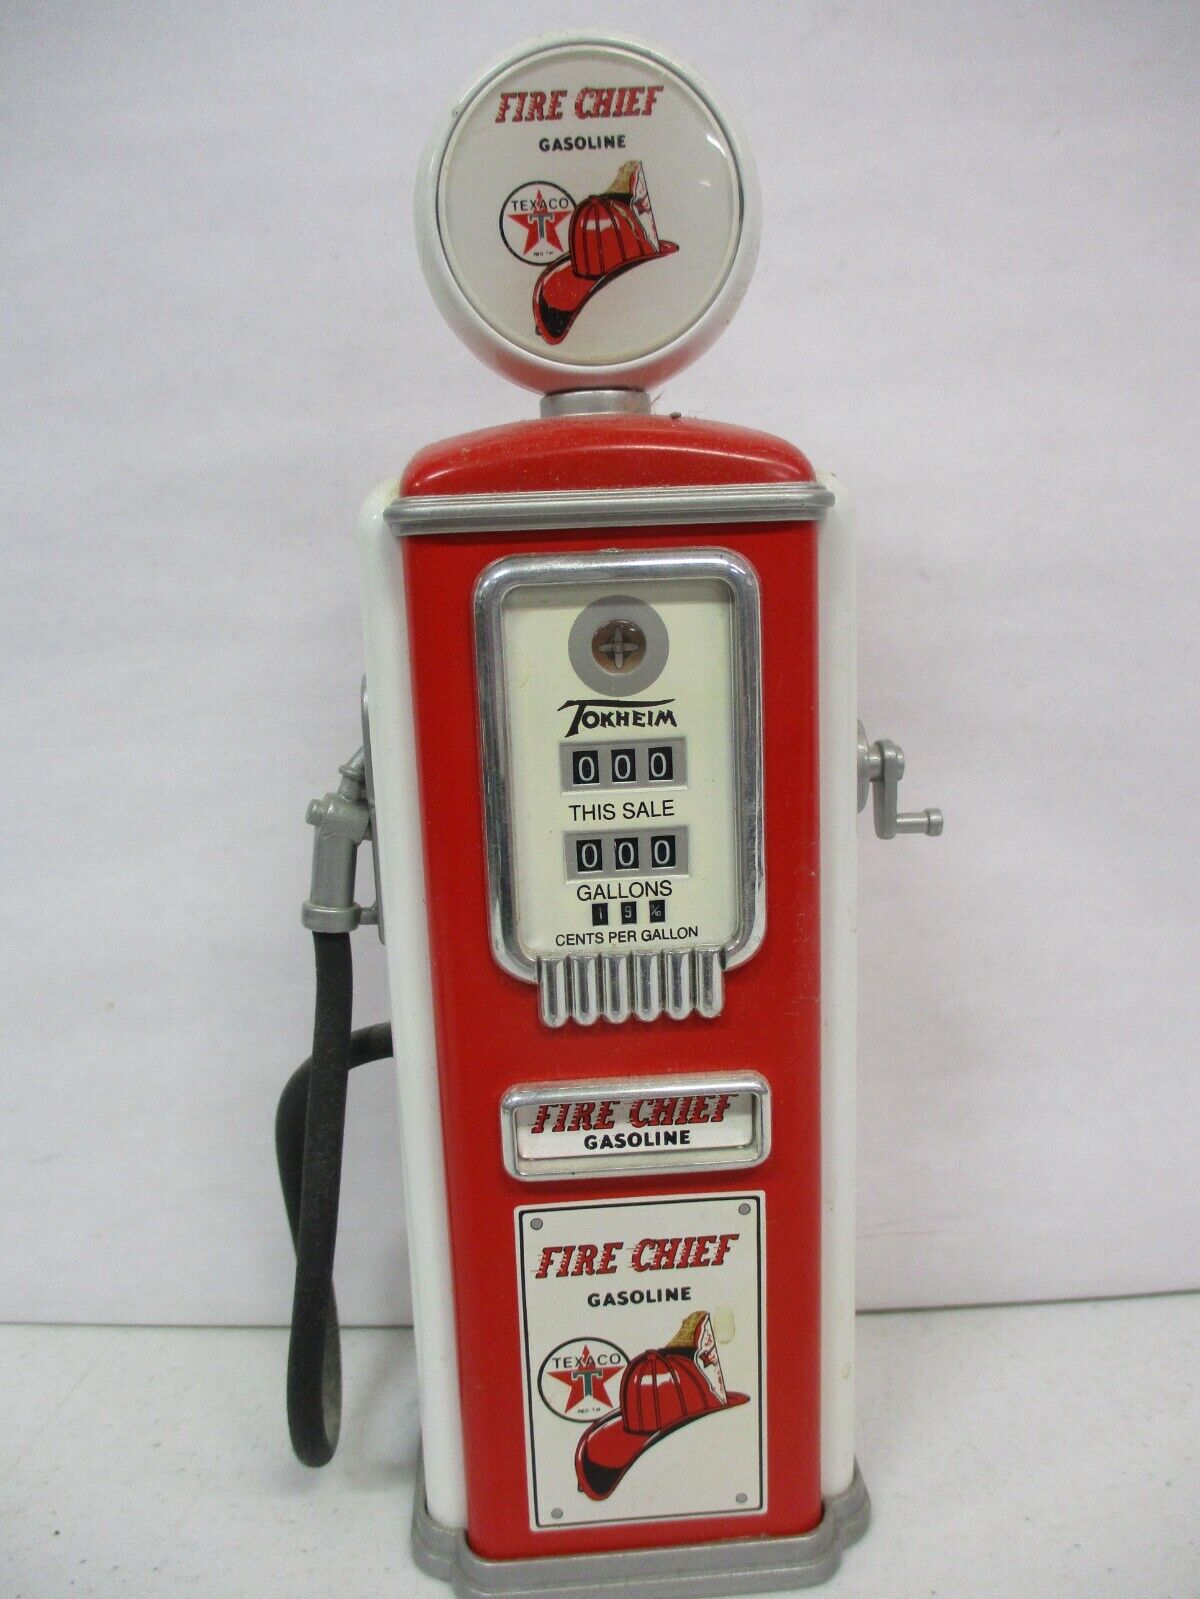 Gearbox Texaco Fire Chief Gas Pump Replica